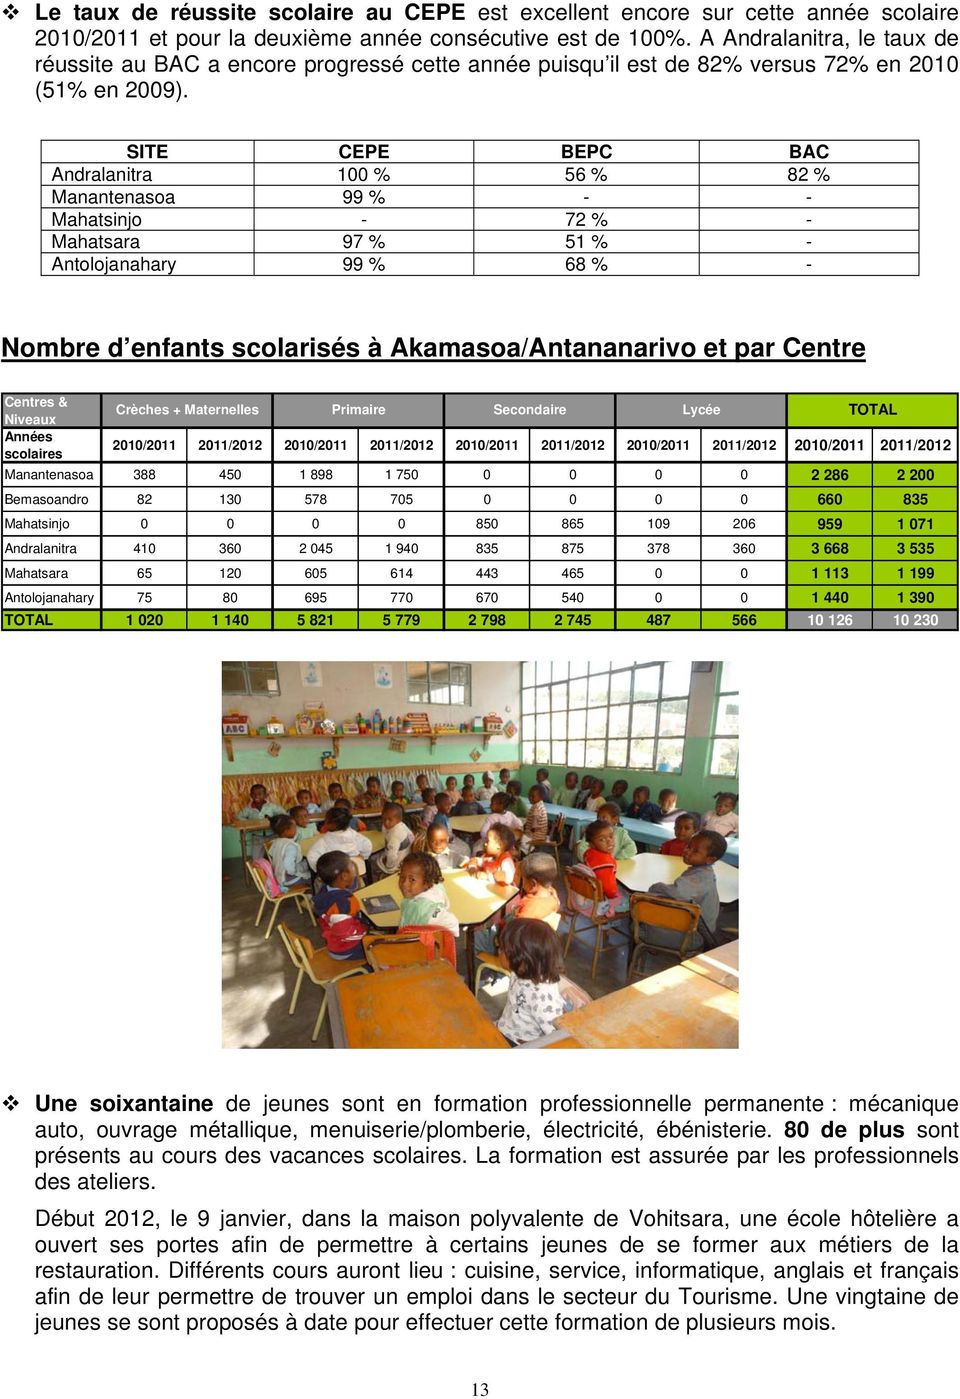 SITE CEPE BEPC BAC Andralanitra 100 % 56 % 82 % Manantenasoa 99 % - - Mahatsinjo - 72 % - Mahatsara 97 % 51 % - Antolojanahary 99 % 68 % - Nombre d enfants scolarisés à Akamasoa/Antananarivo et par